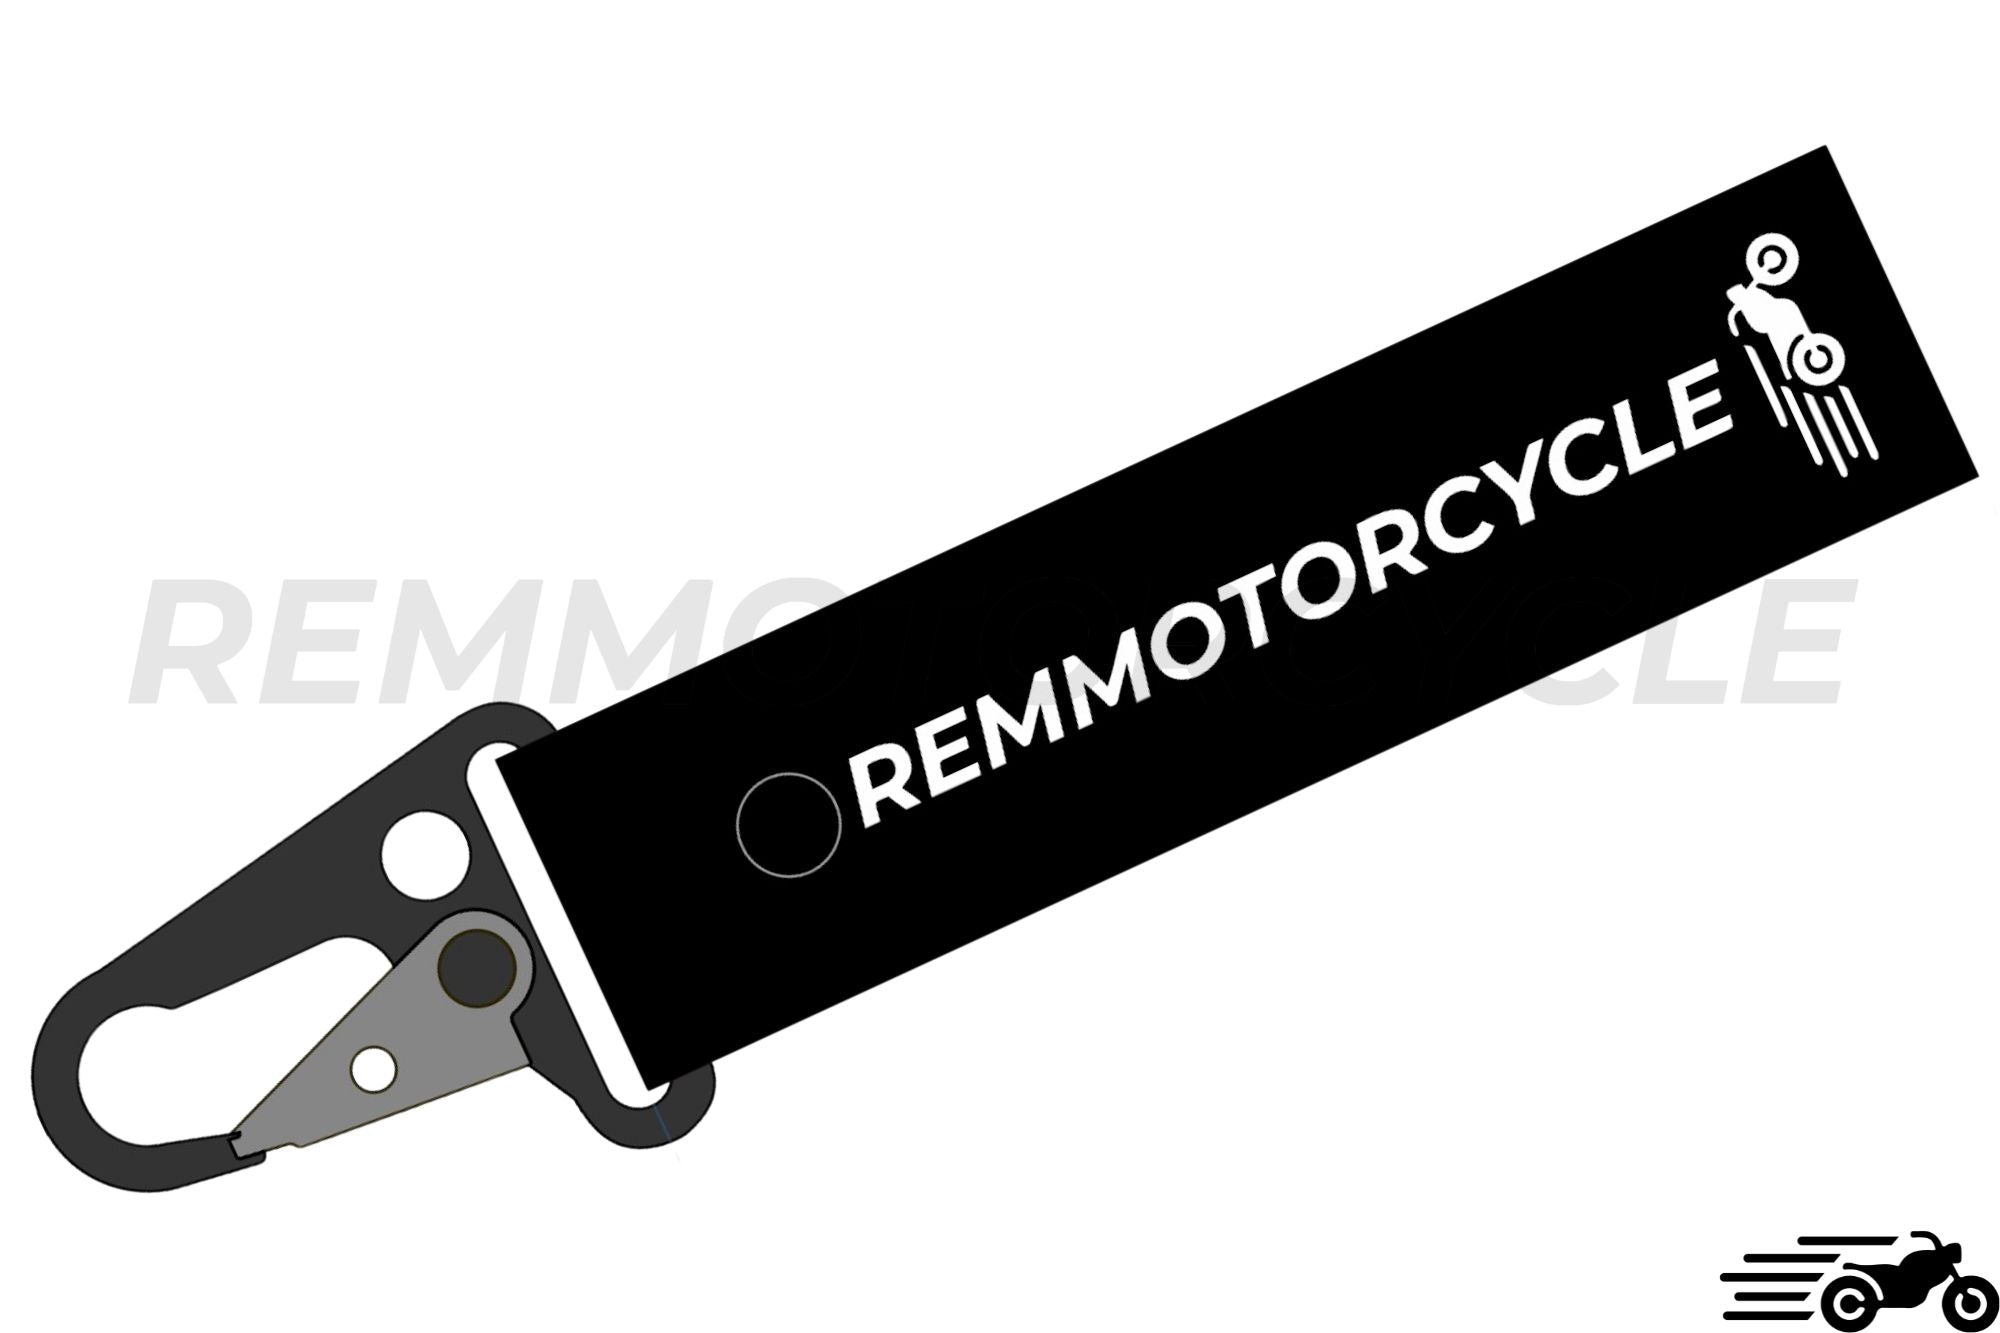 REMMOTORCYCLE key ring